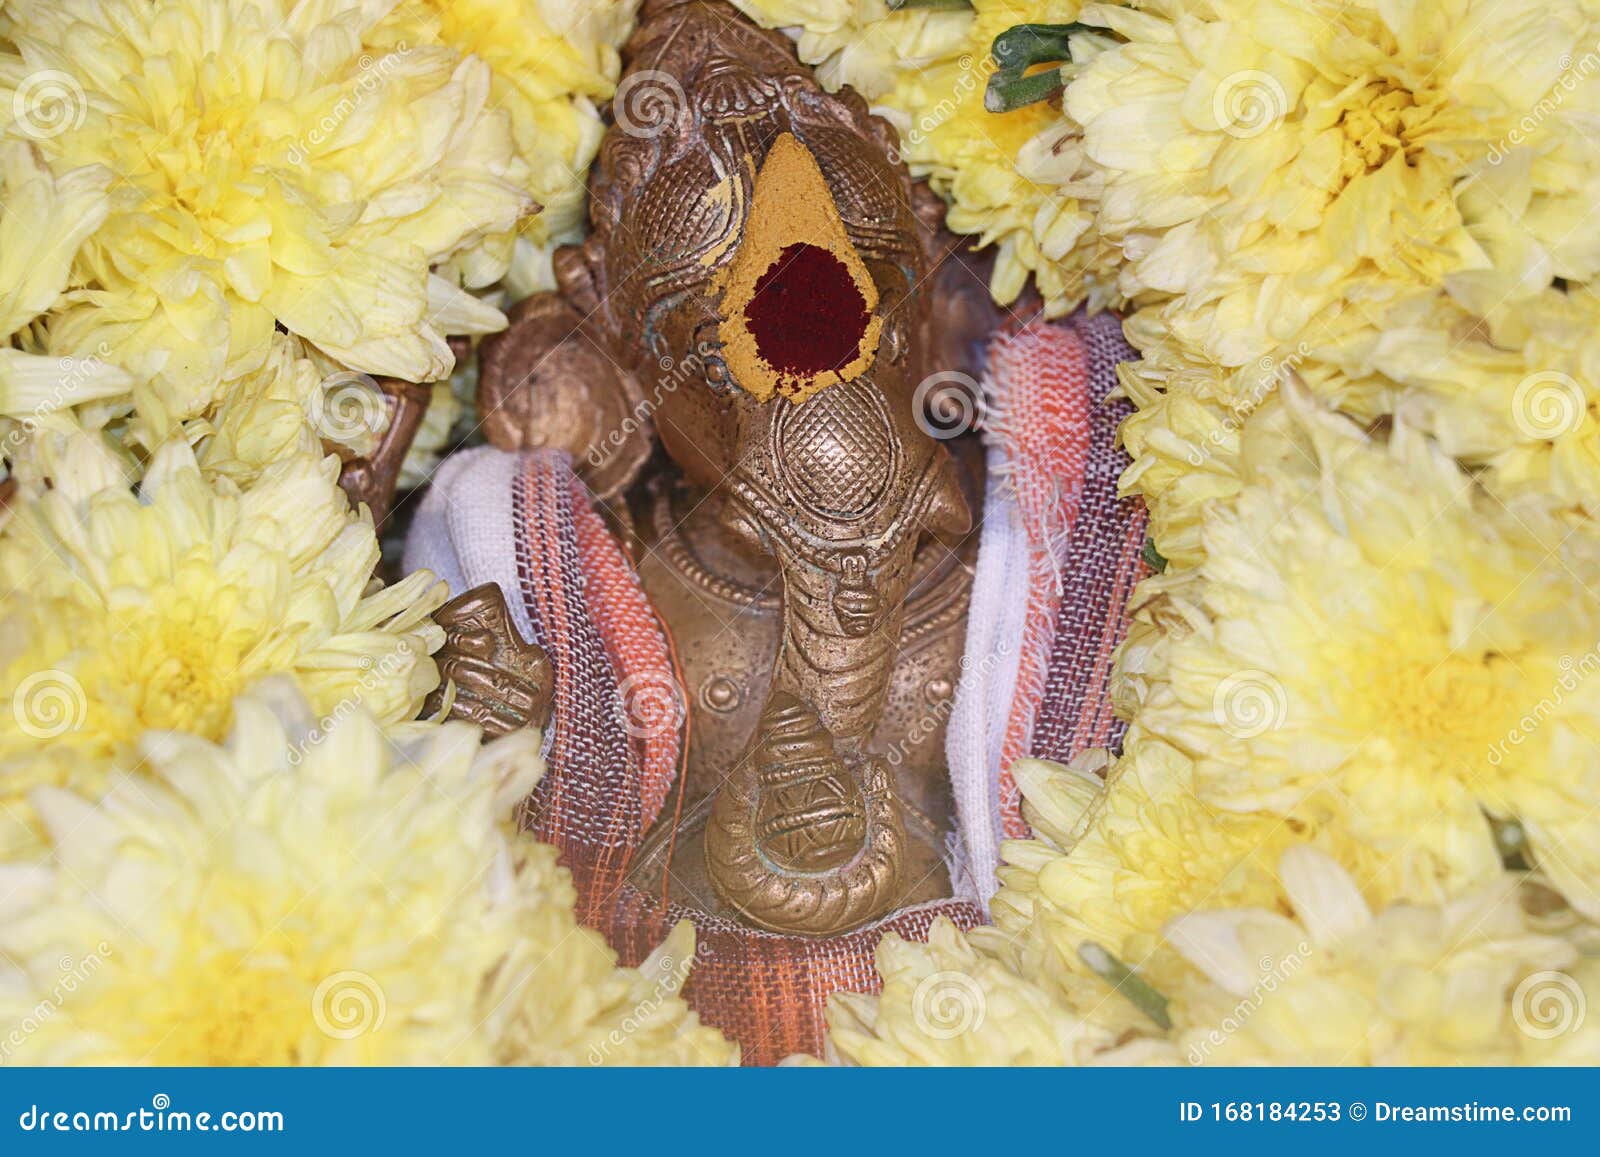 lord ganesha, the elephant-headed hindu deity